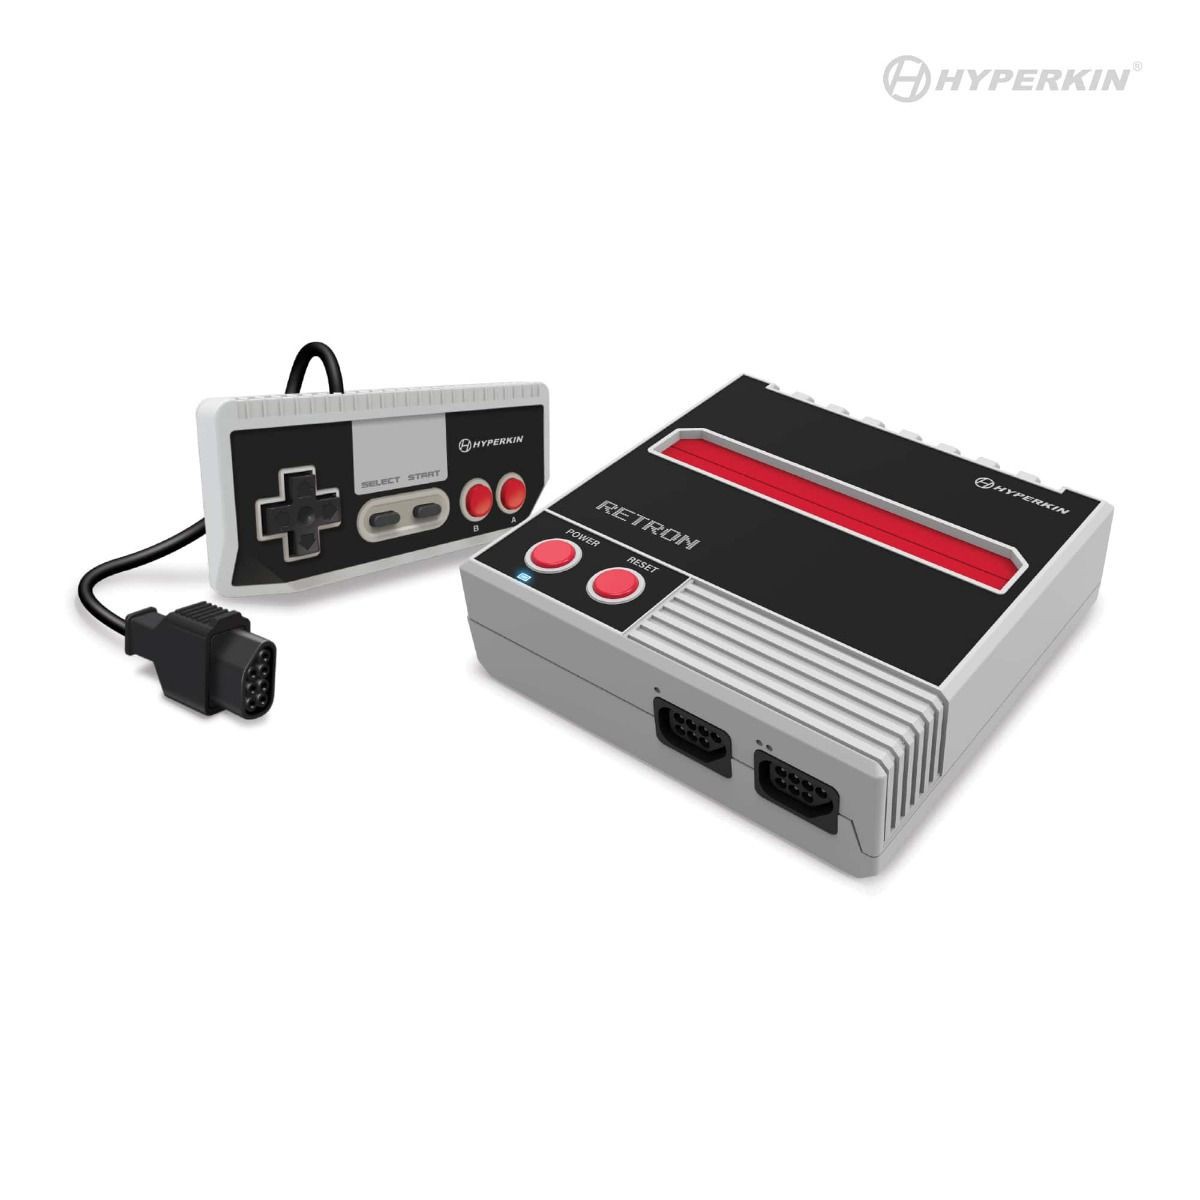 RetroN 1 NES Gaming Console (Gray) - AV - Nintendo NES Hardware - 2